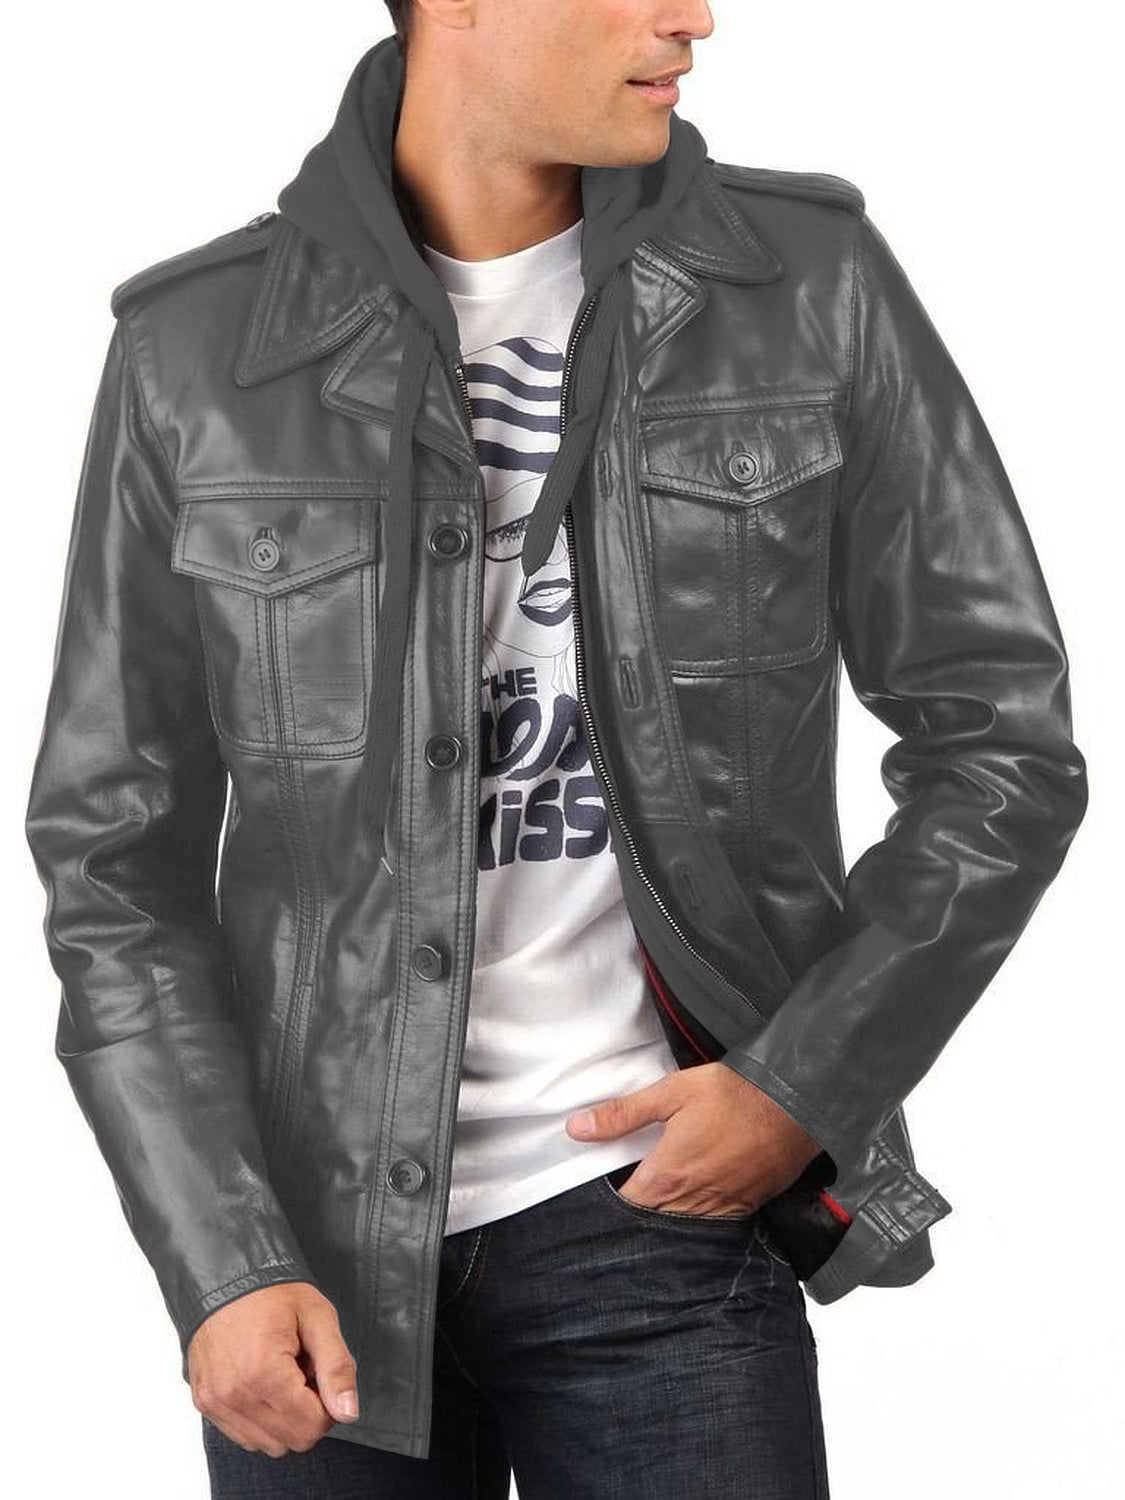 Leather Jackets Hub Mens Genuine Lambskin Leather Coat (Black, Regal Jacket) - 1501107